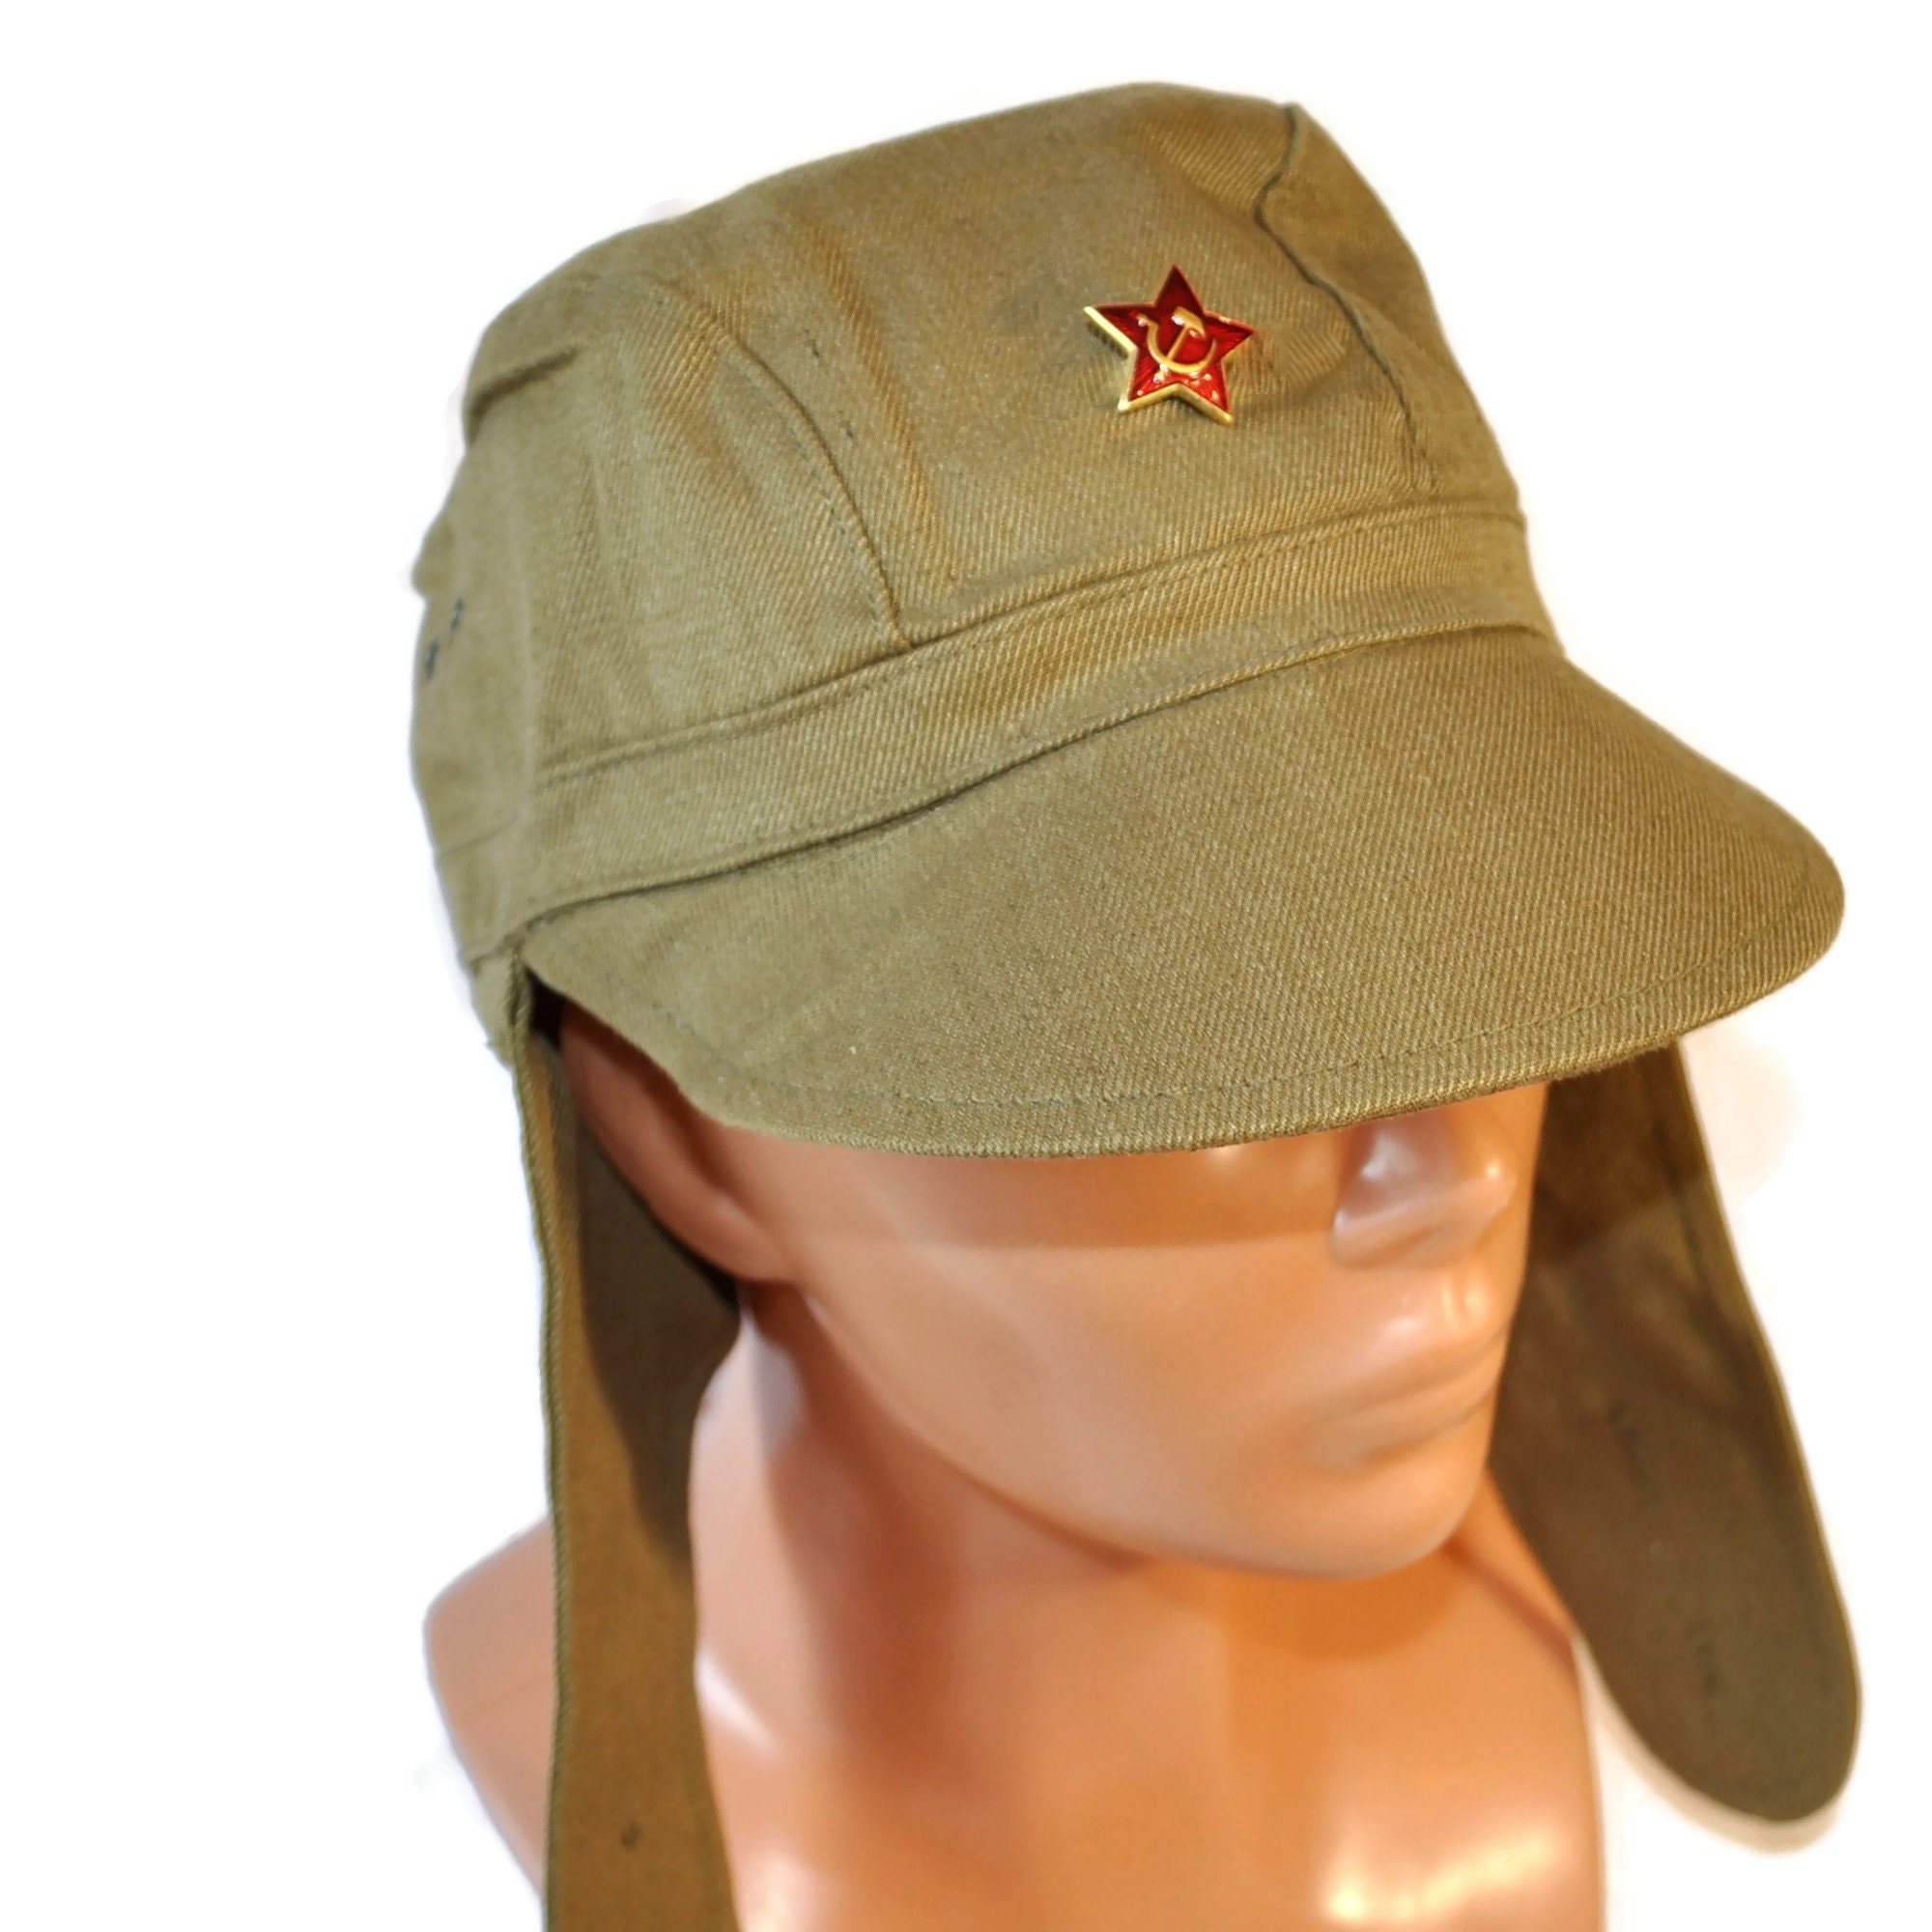 Soviet Military Hat - Etsy Canada